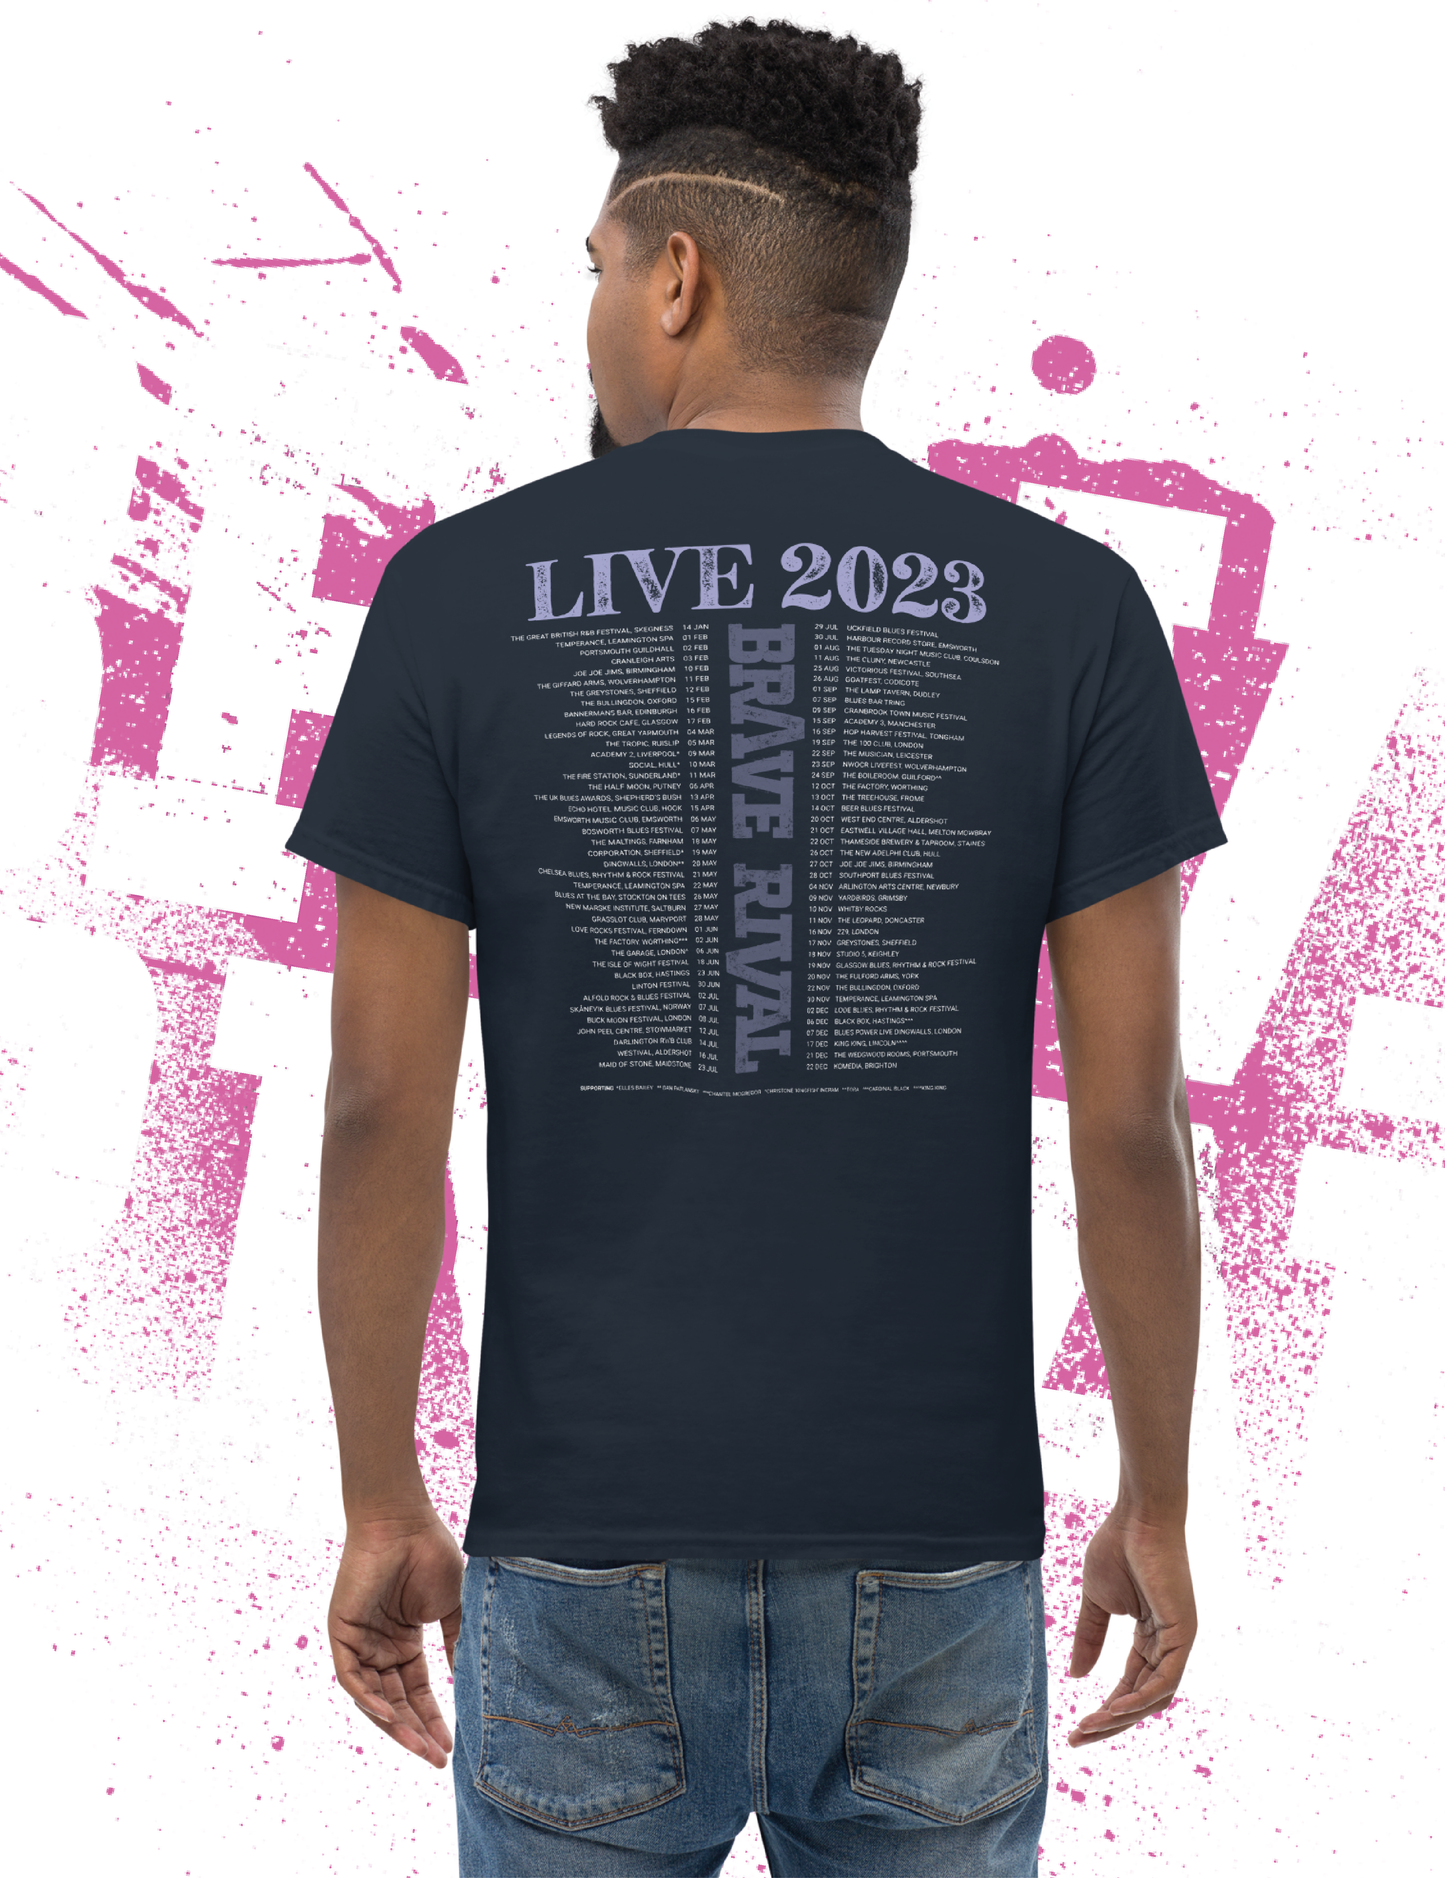 Unisex LIVE 2023 Tour Tee (Online Exclusive)